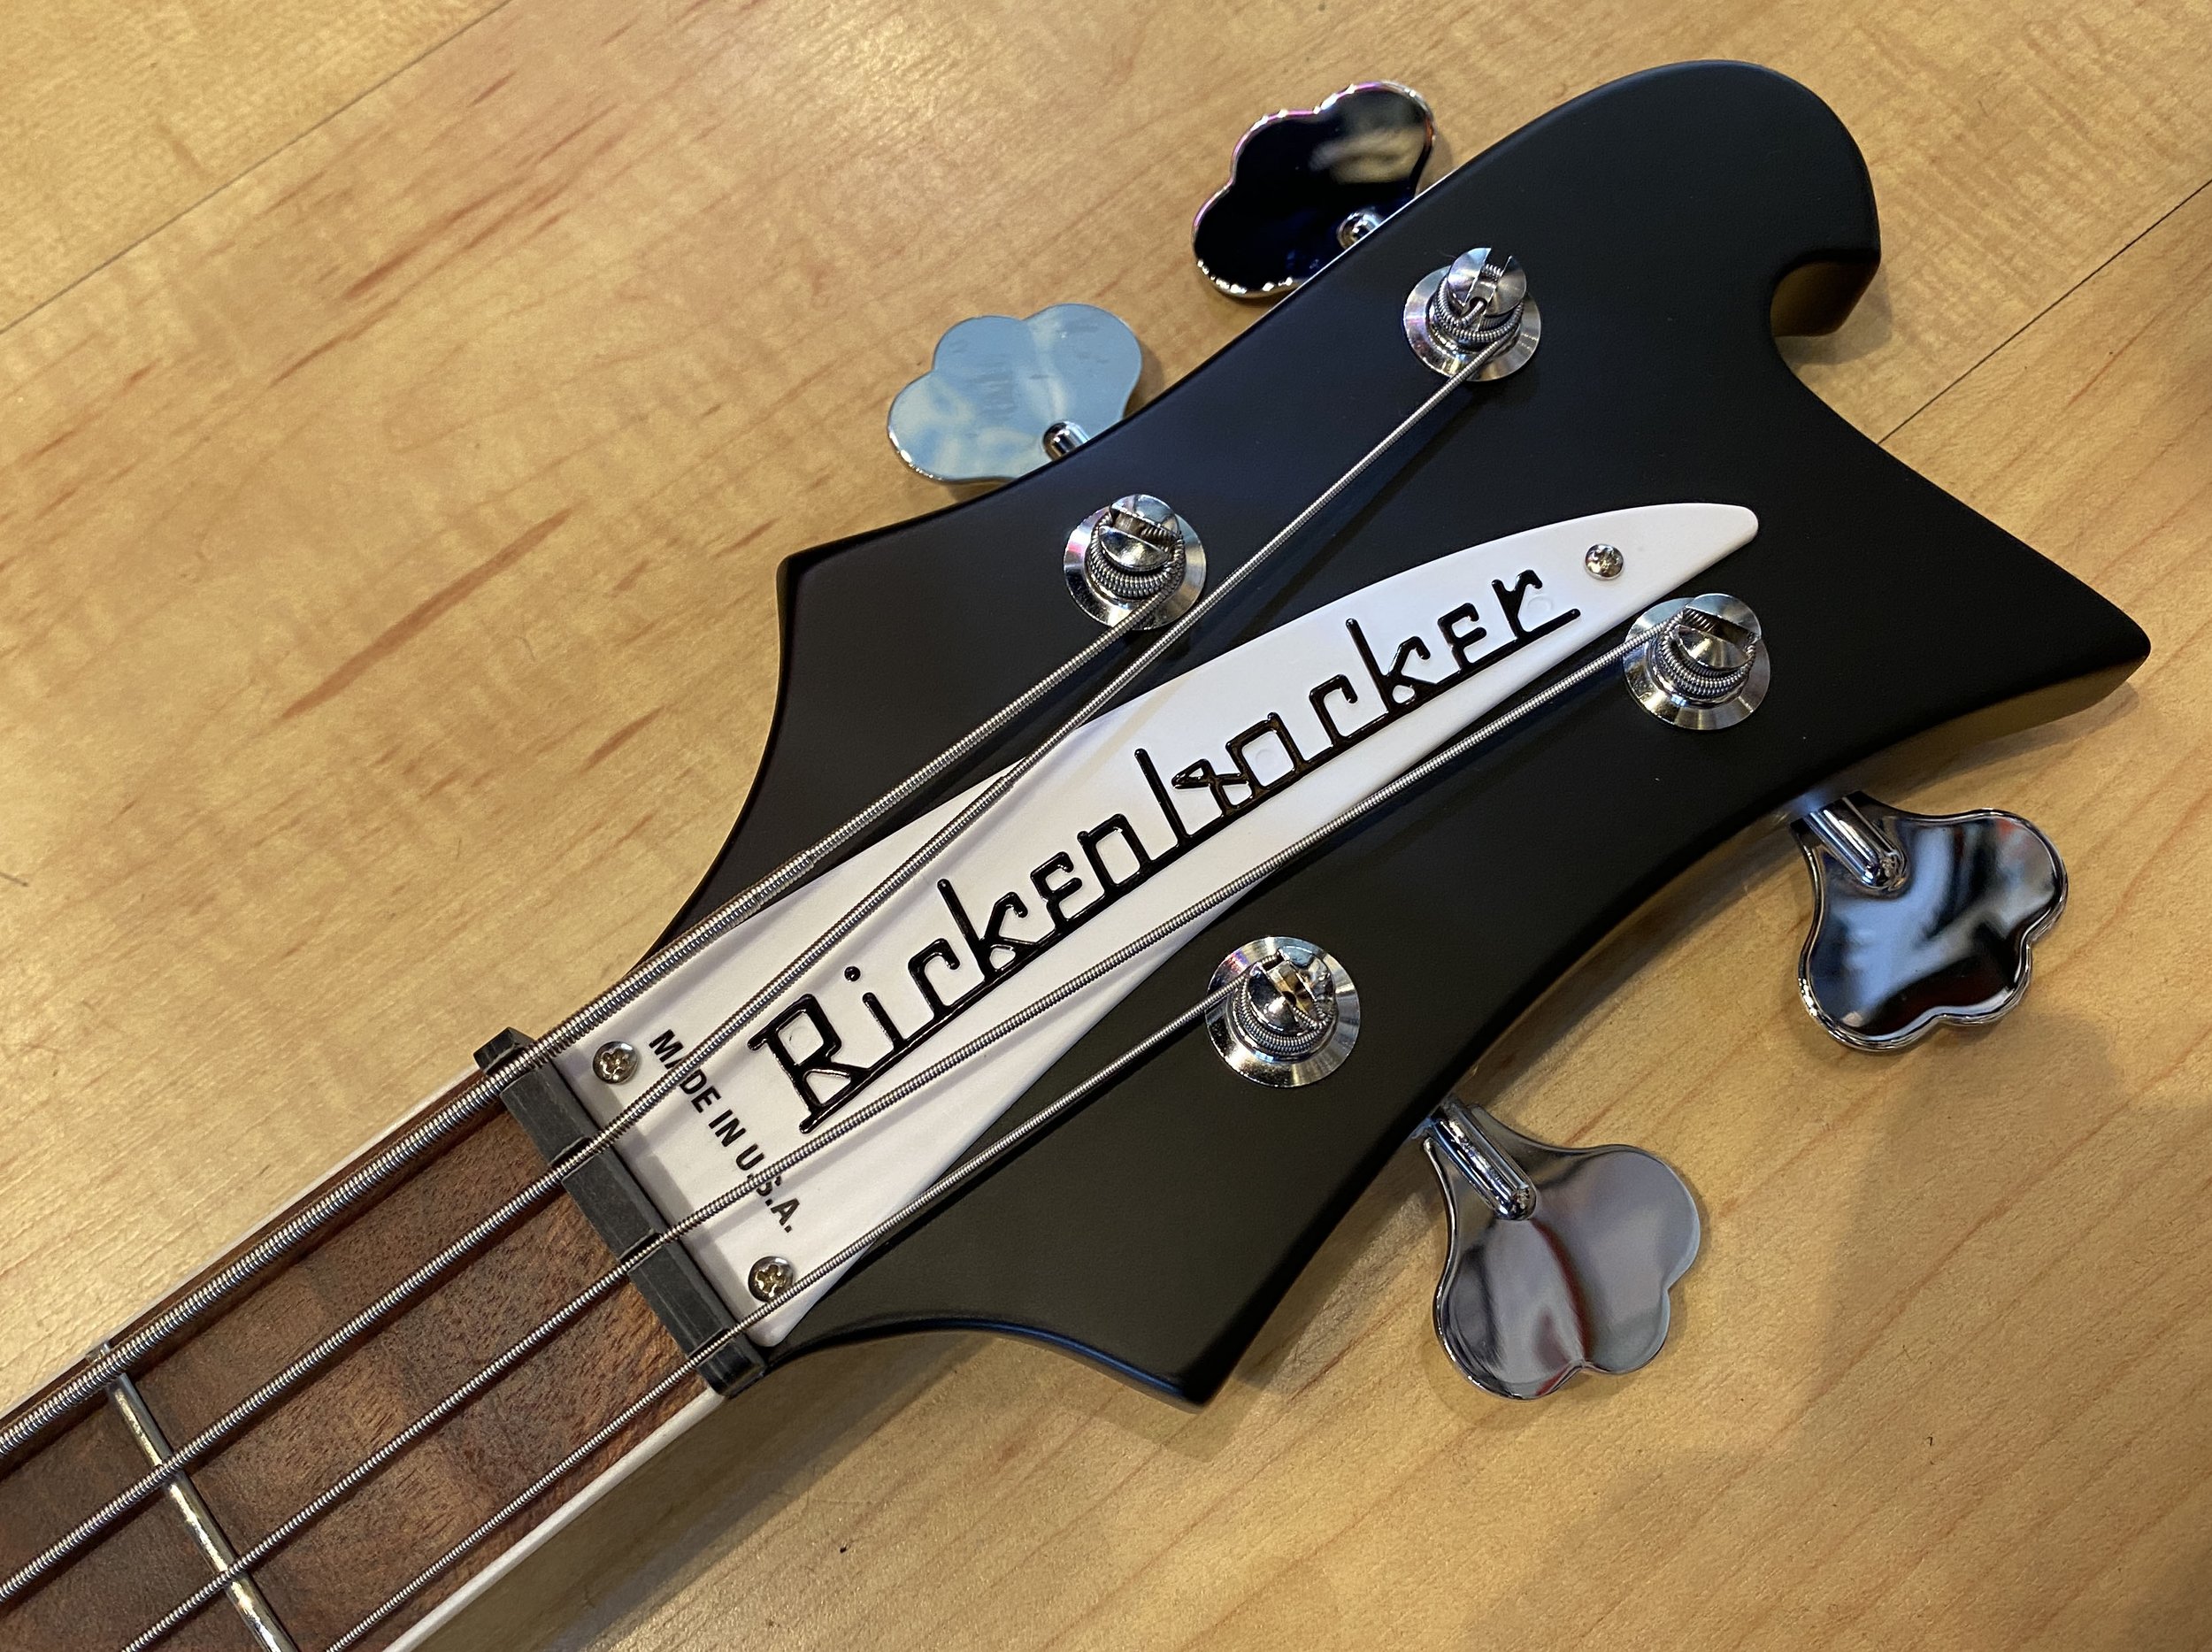 Rickenbacker 4003 Bass Matte Black — Andy Babiuk's Fab Gear